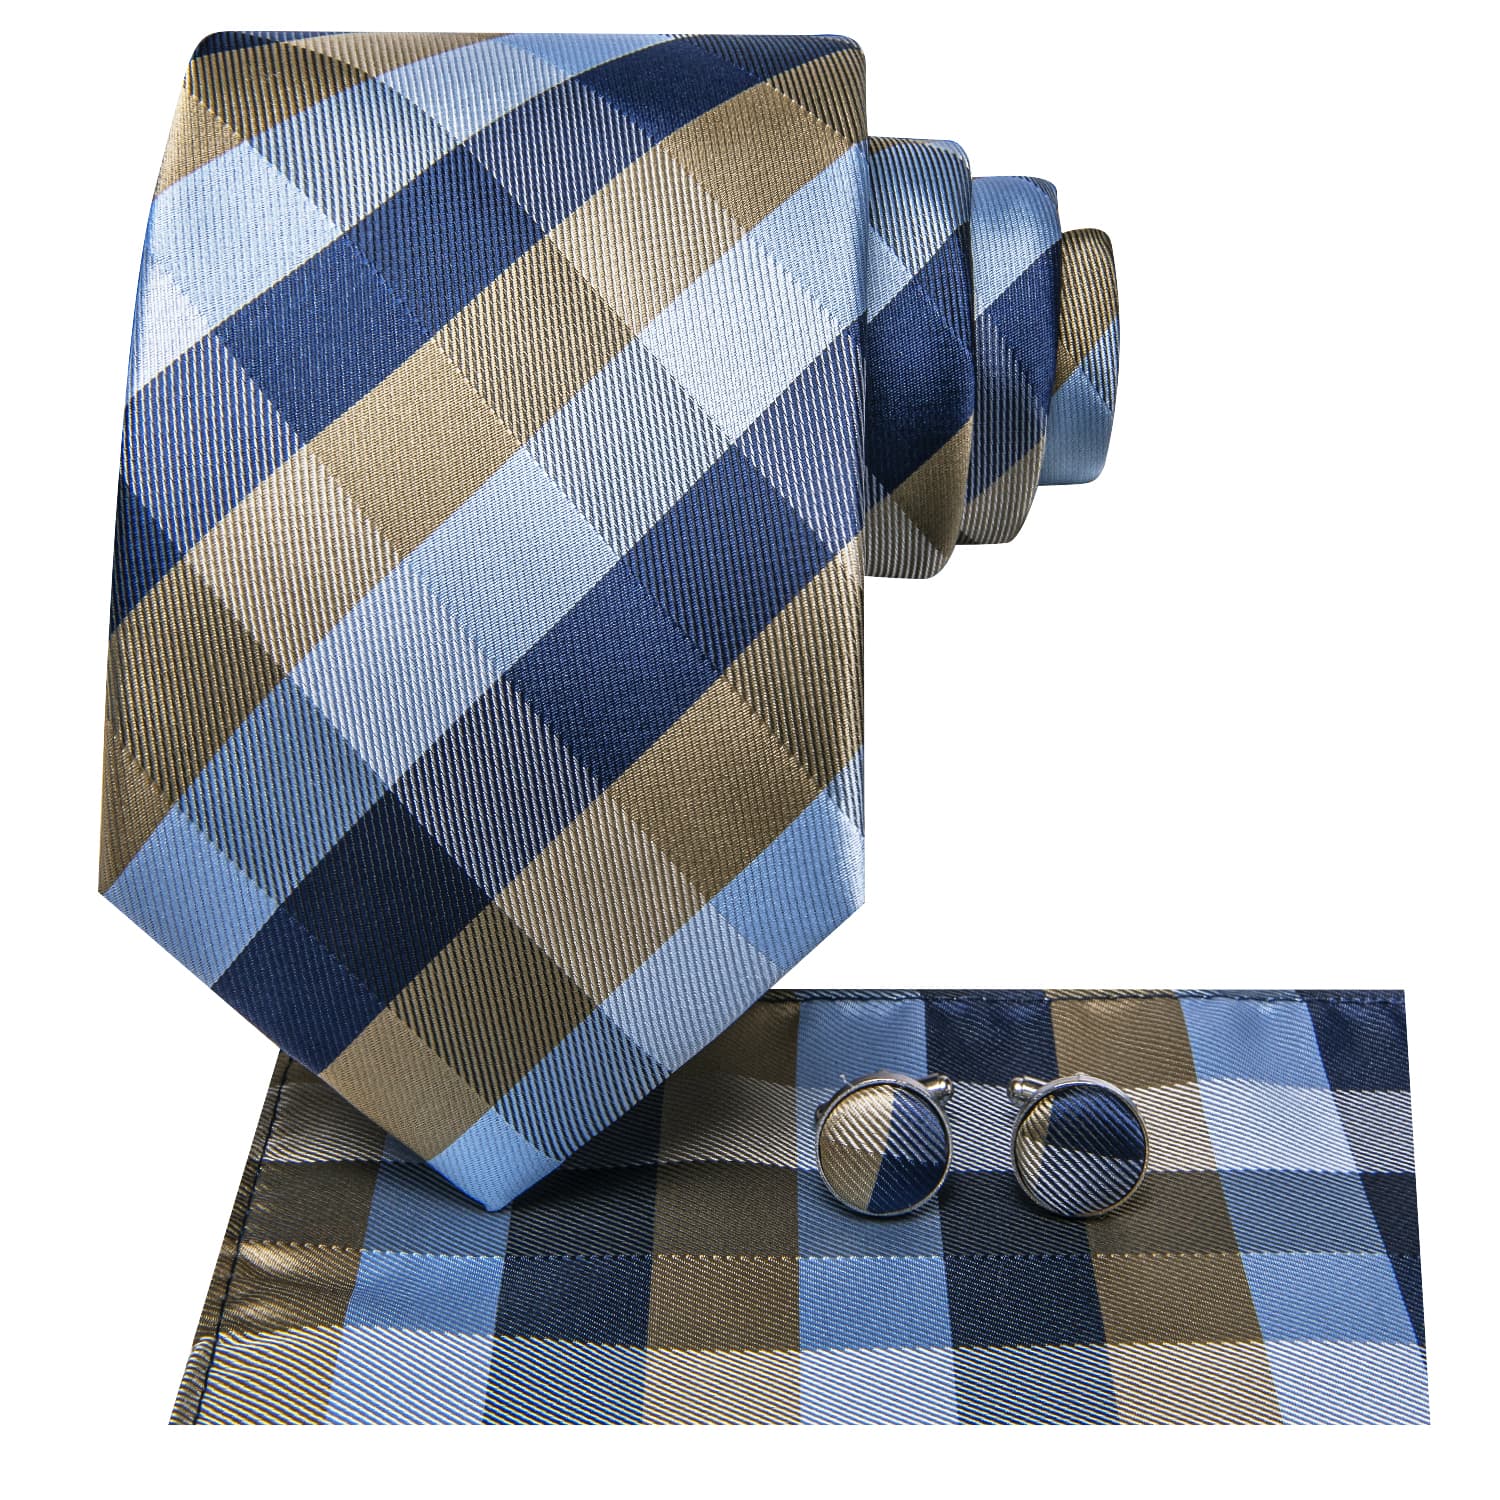 Hi-Tie Plaid Tie Navy Blue Sky Blue Silk Necktie for Men